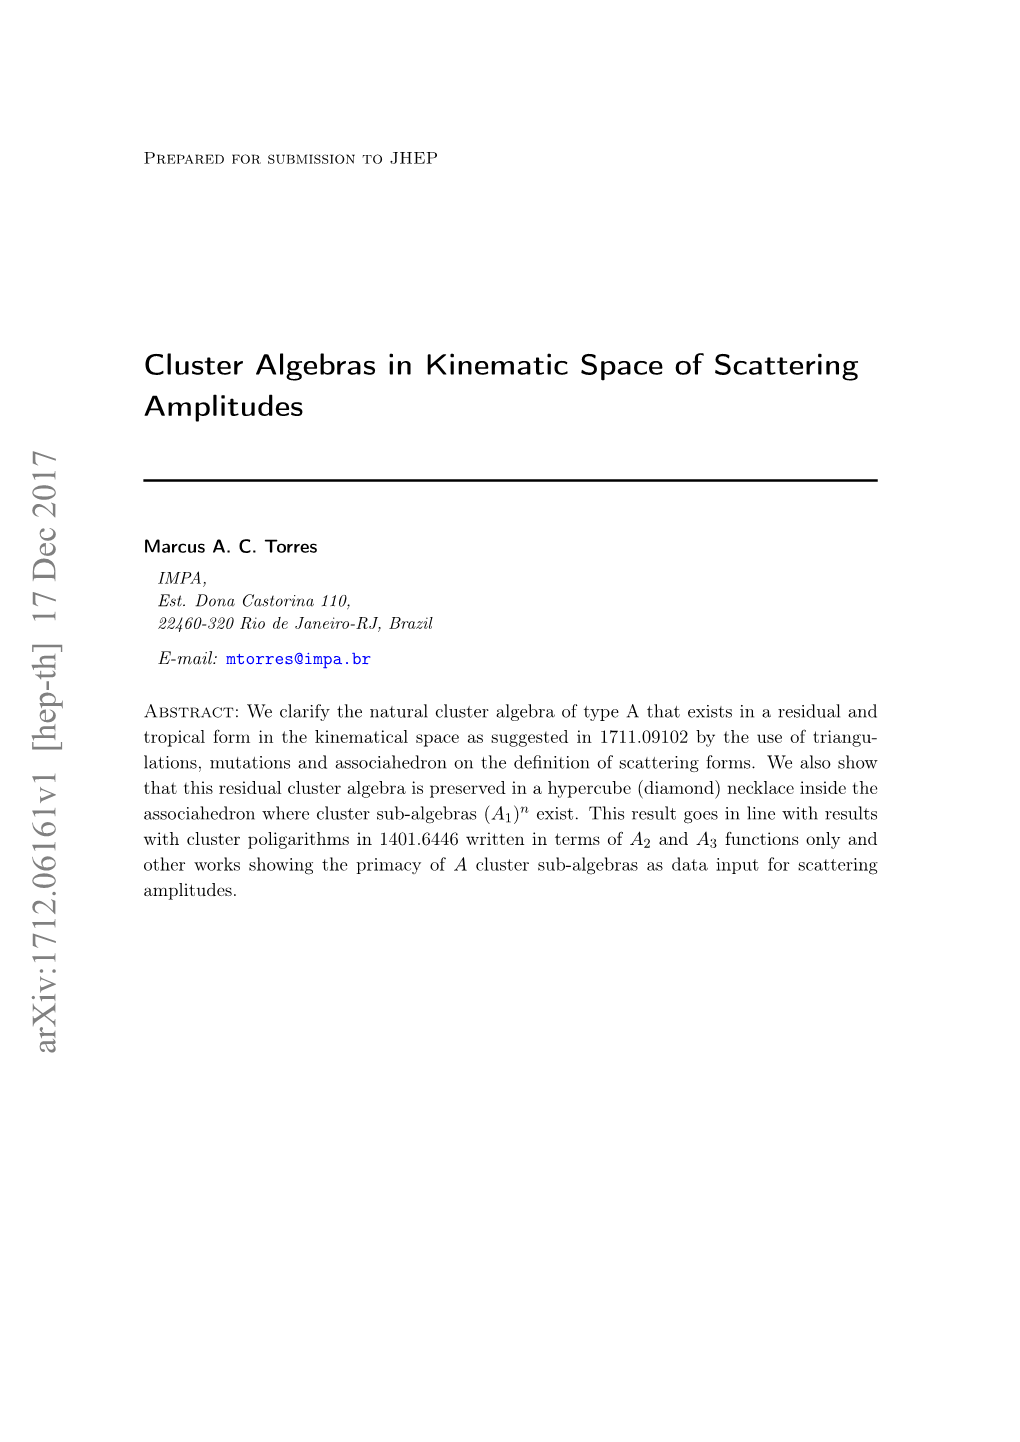 Cluster Algebras in Kinematic Space of Scattering Amplitudes